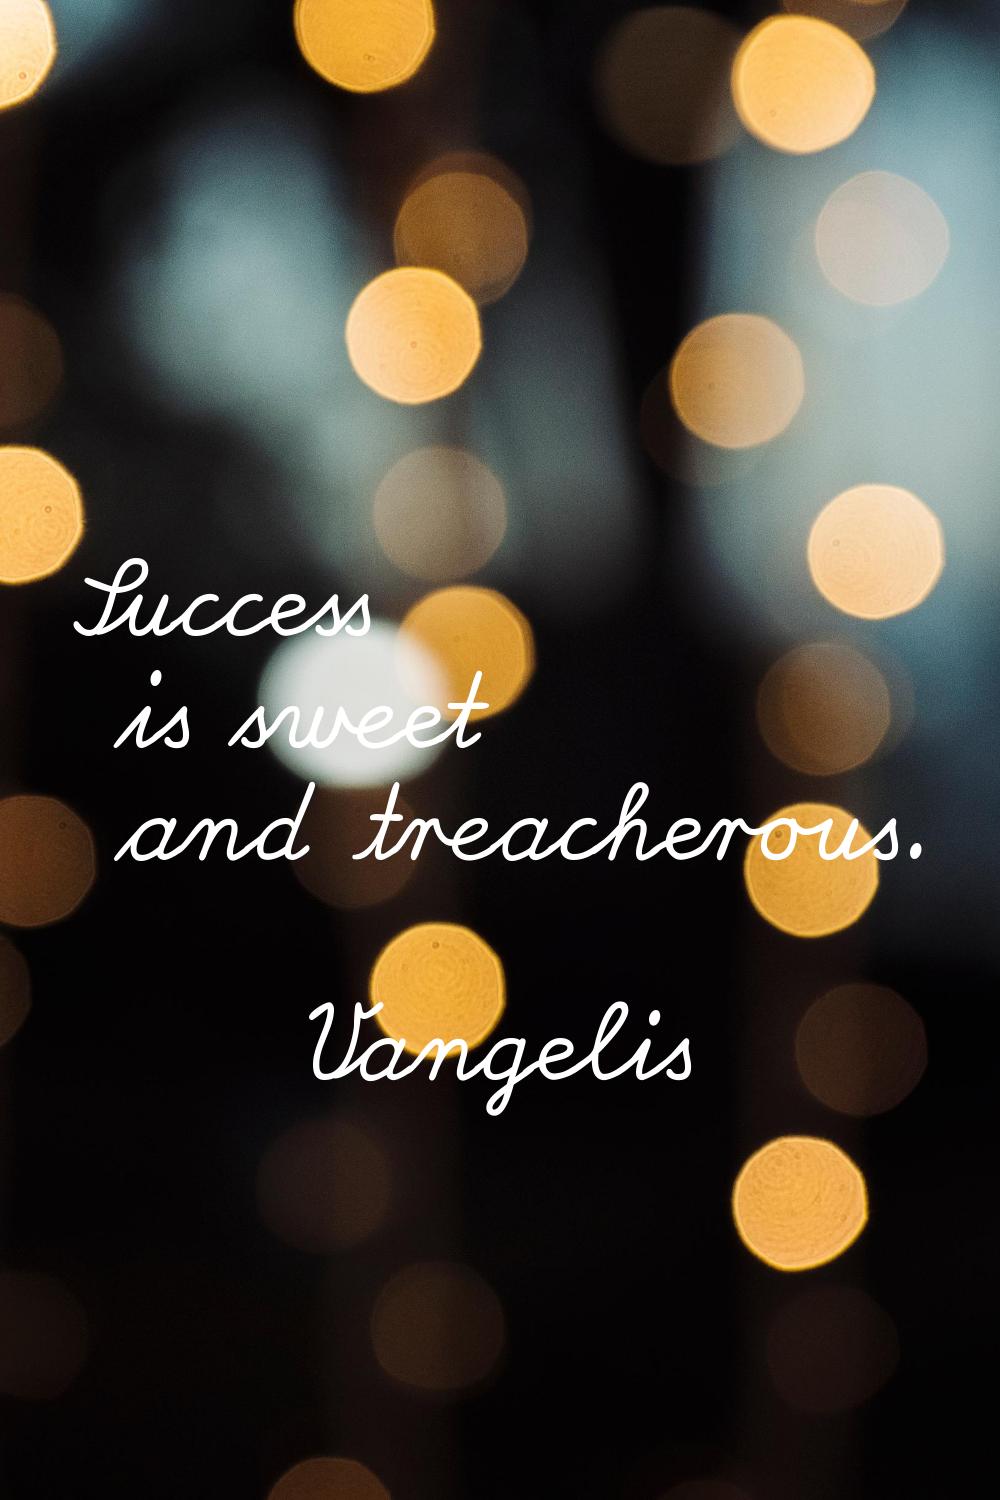 Success is sweet and treacherous.